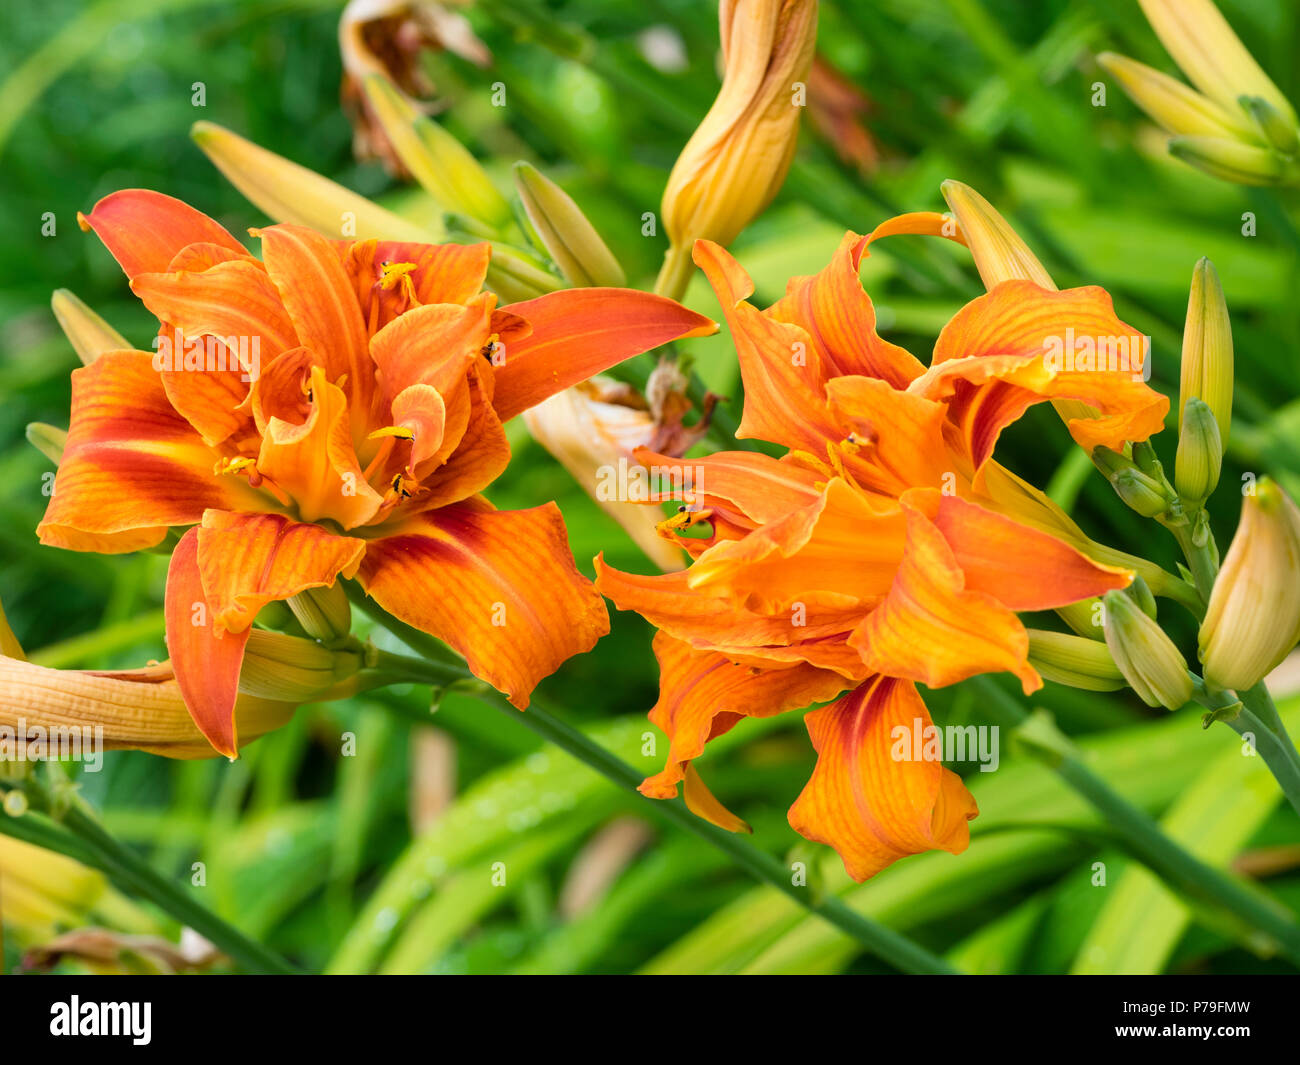 Double orange flowers of the hardy, summer flowering daylily, Hemerocallis fulva 'Kwanso Flore Pleno' Stock Photo